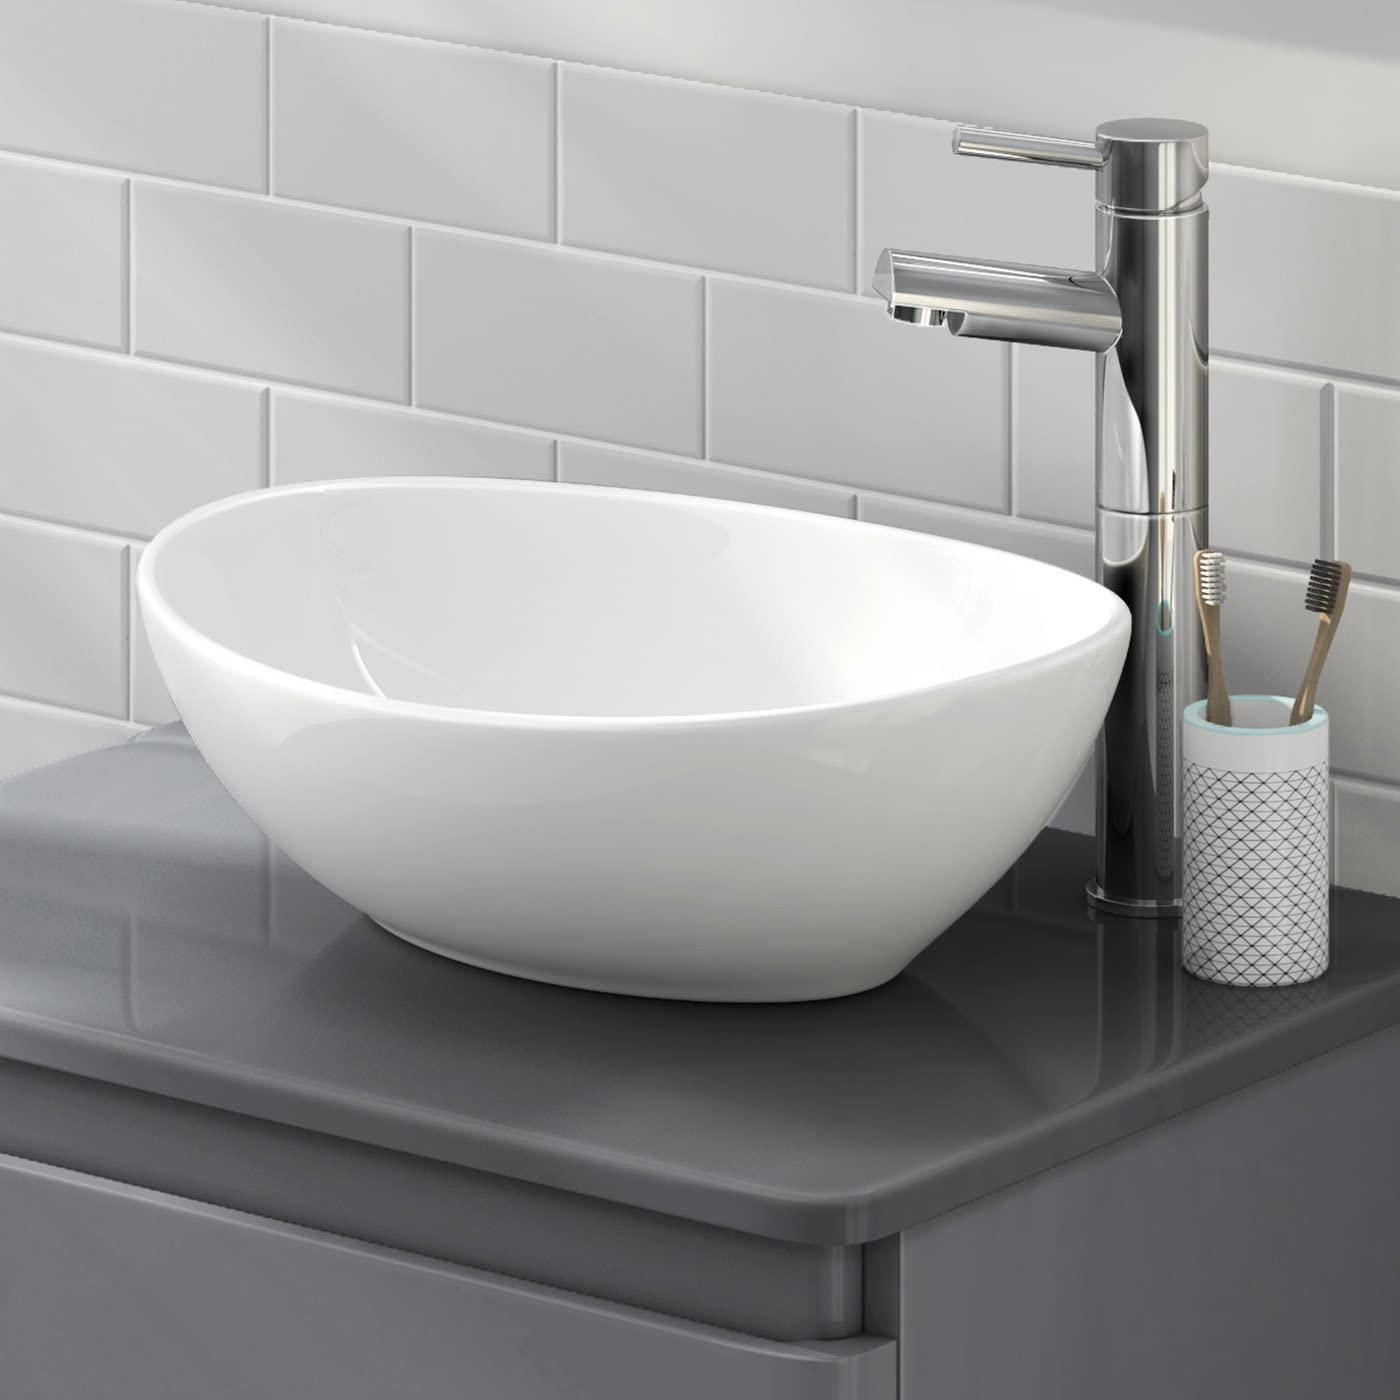 Modern Oval Ceramic Countertop Basin - 410mm x 335mm - Gloss White